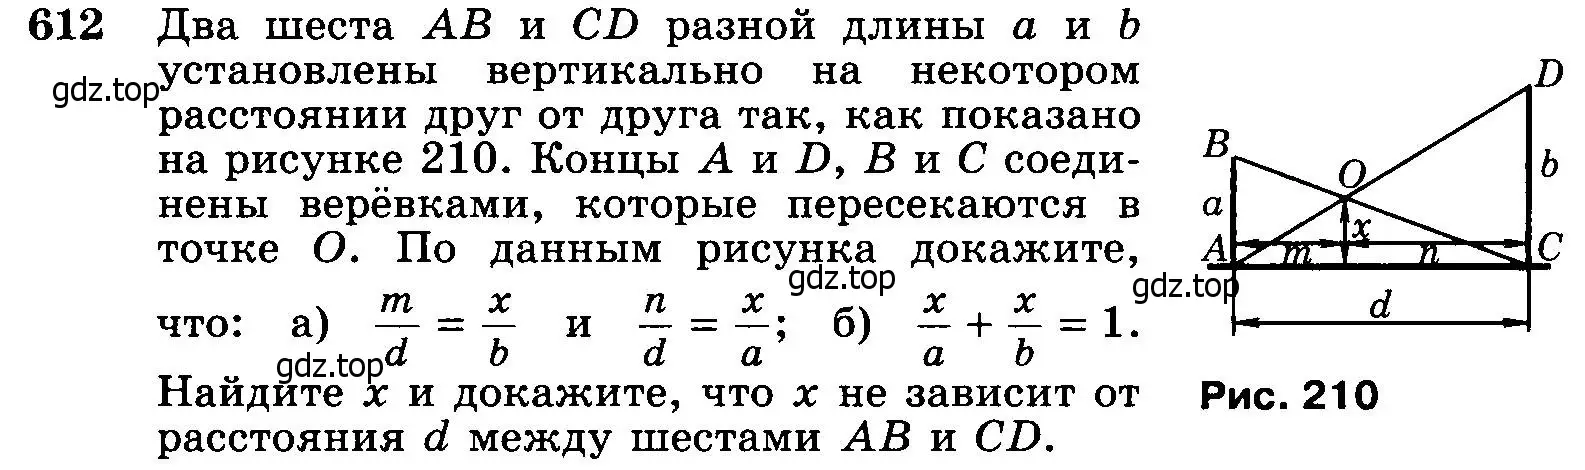 Условие номер 612 (страница 160) гдз по геометрии 7-9 класс Атанасян, Бутузов, учебник